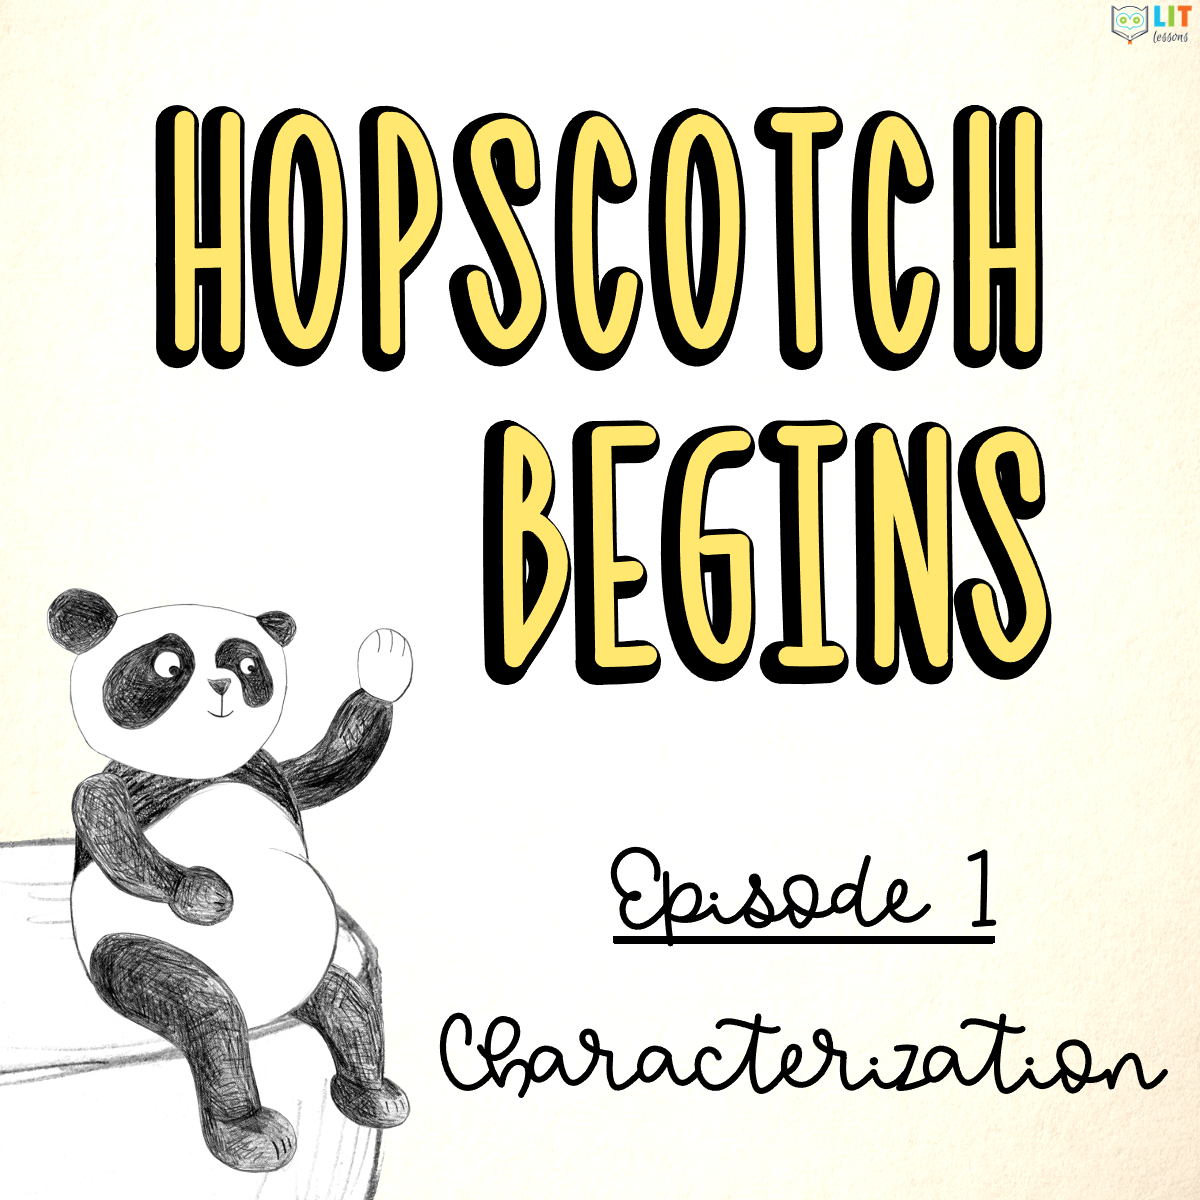 Hopscotch Begins - Characterization